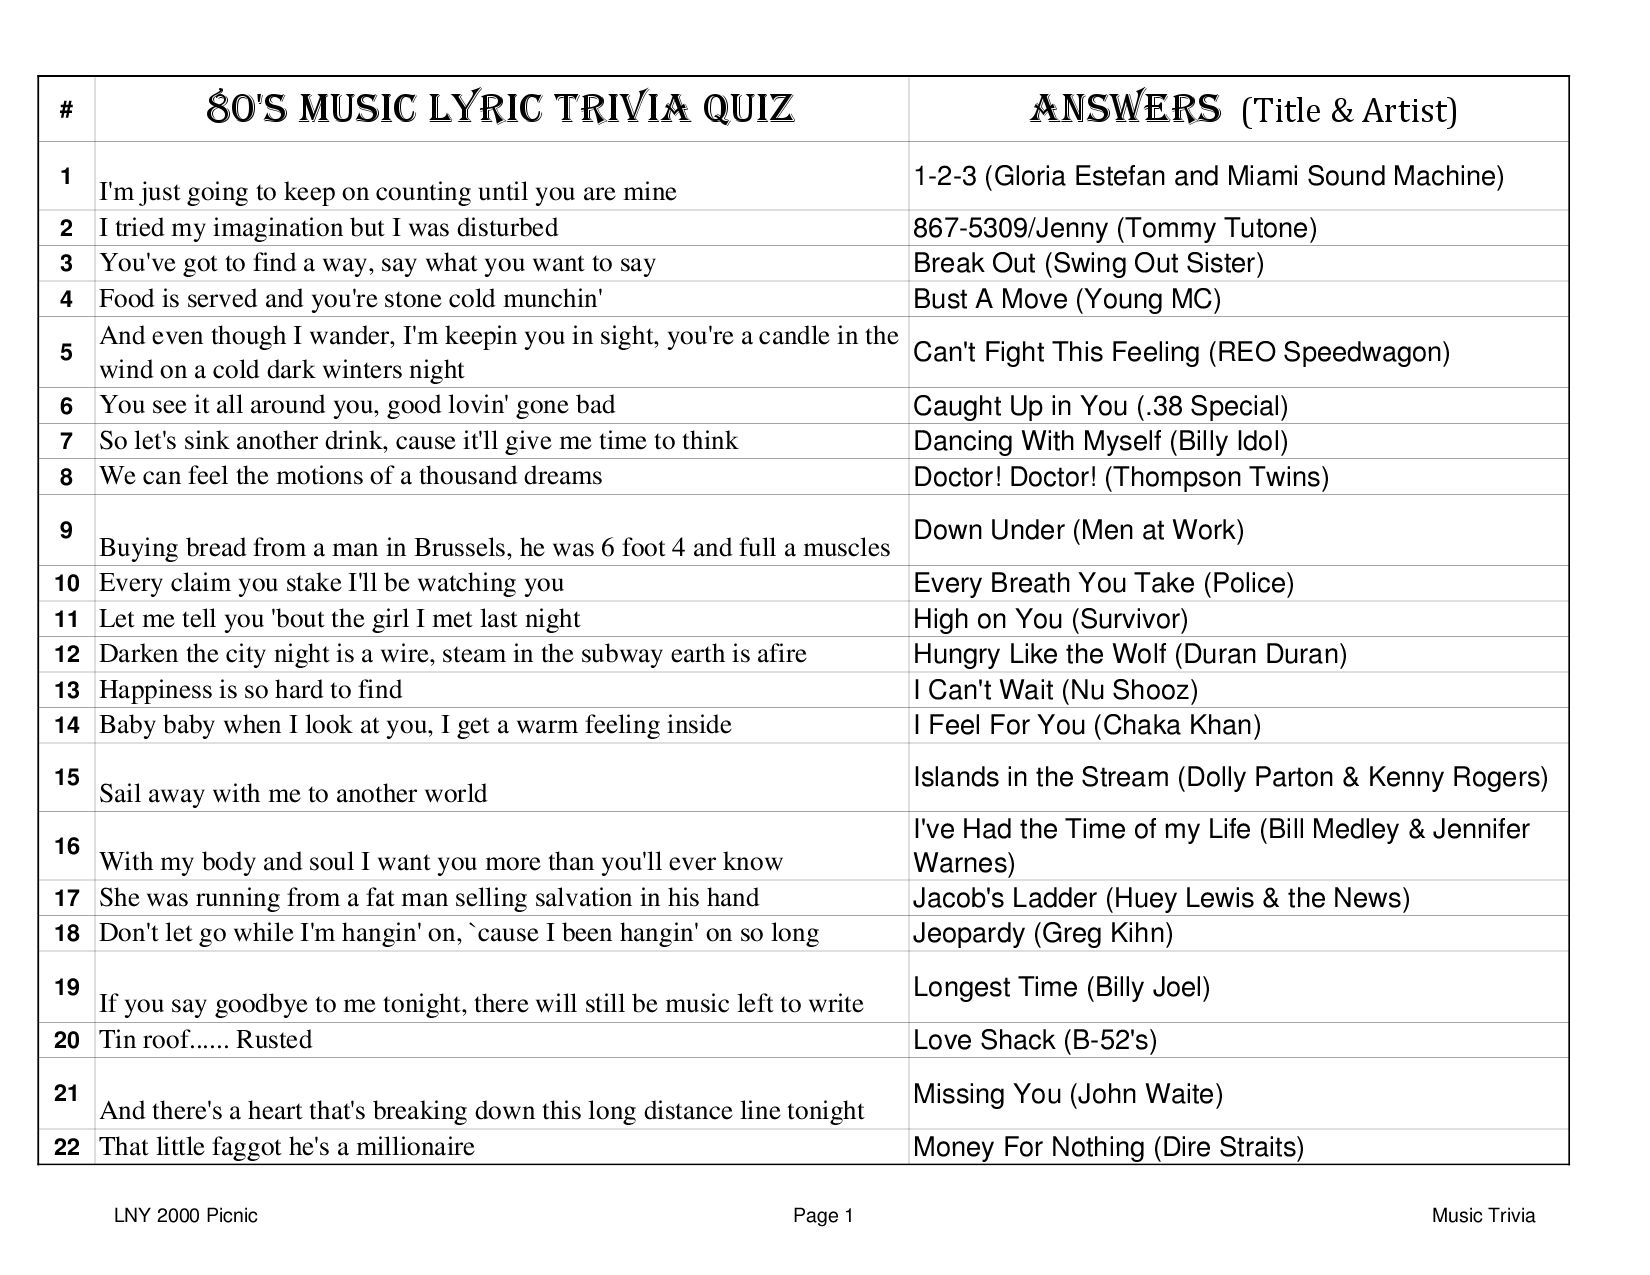 1980 39 s Music Lyric Trivia ANSWERS By Gary Kern Issuu